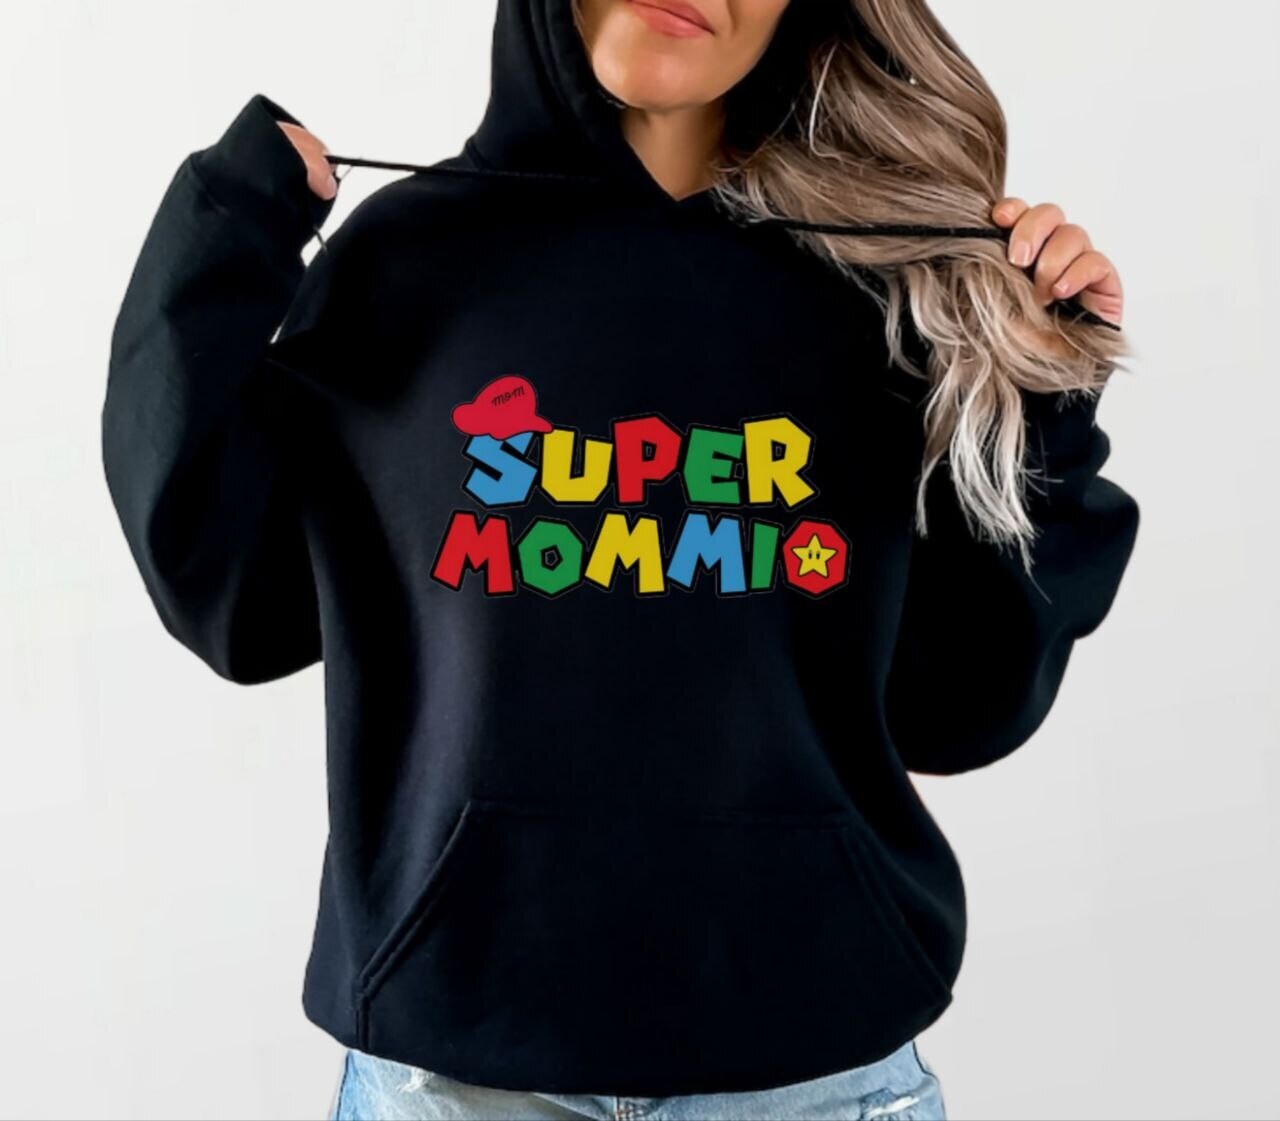 Super mommio_Women's Elite Hoodie black